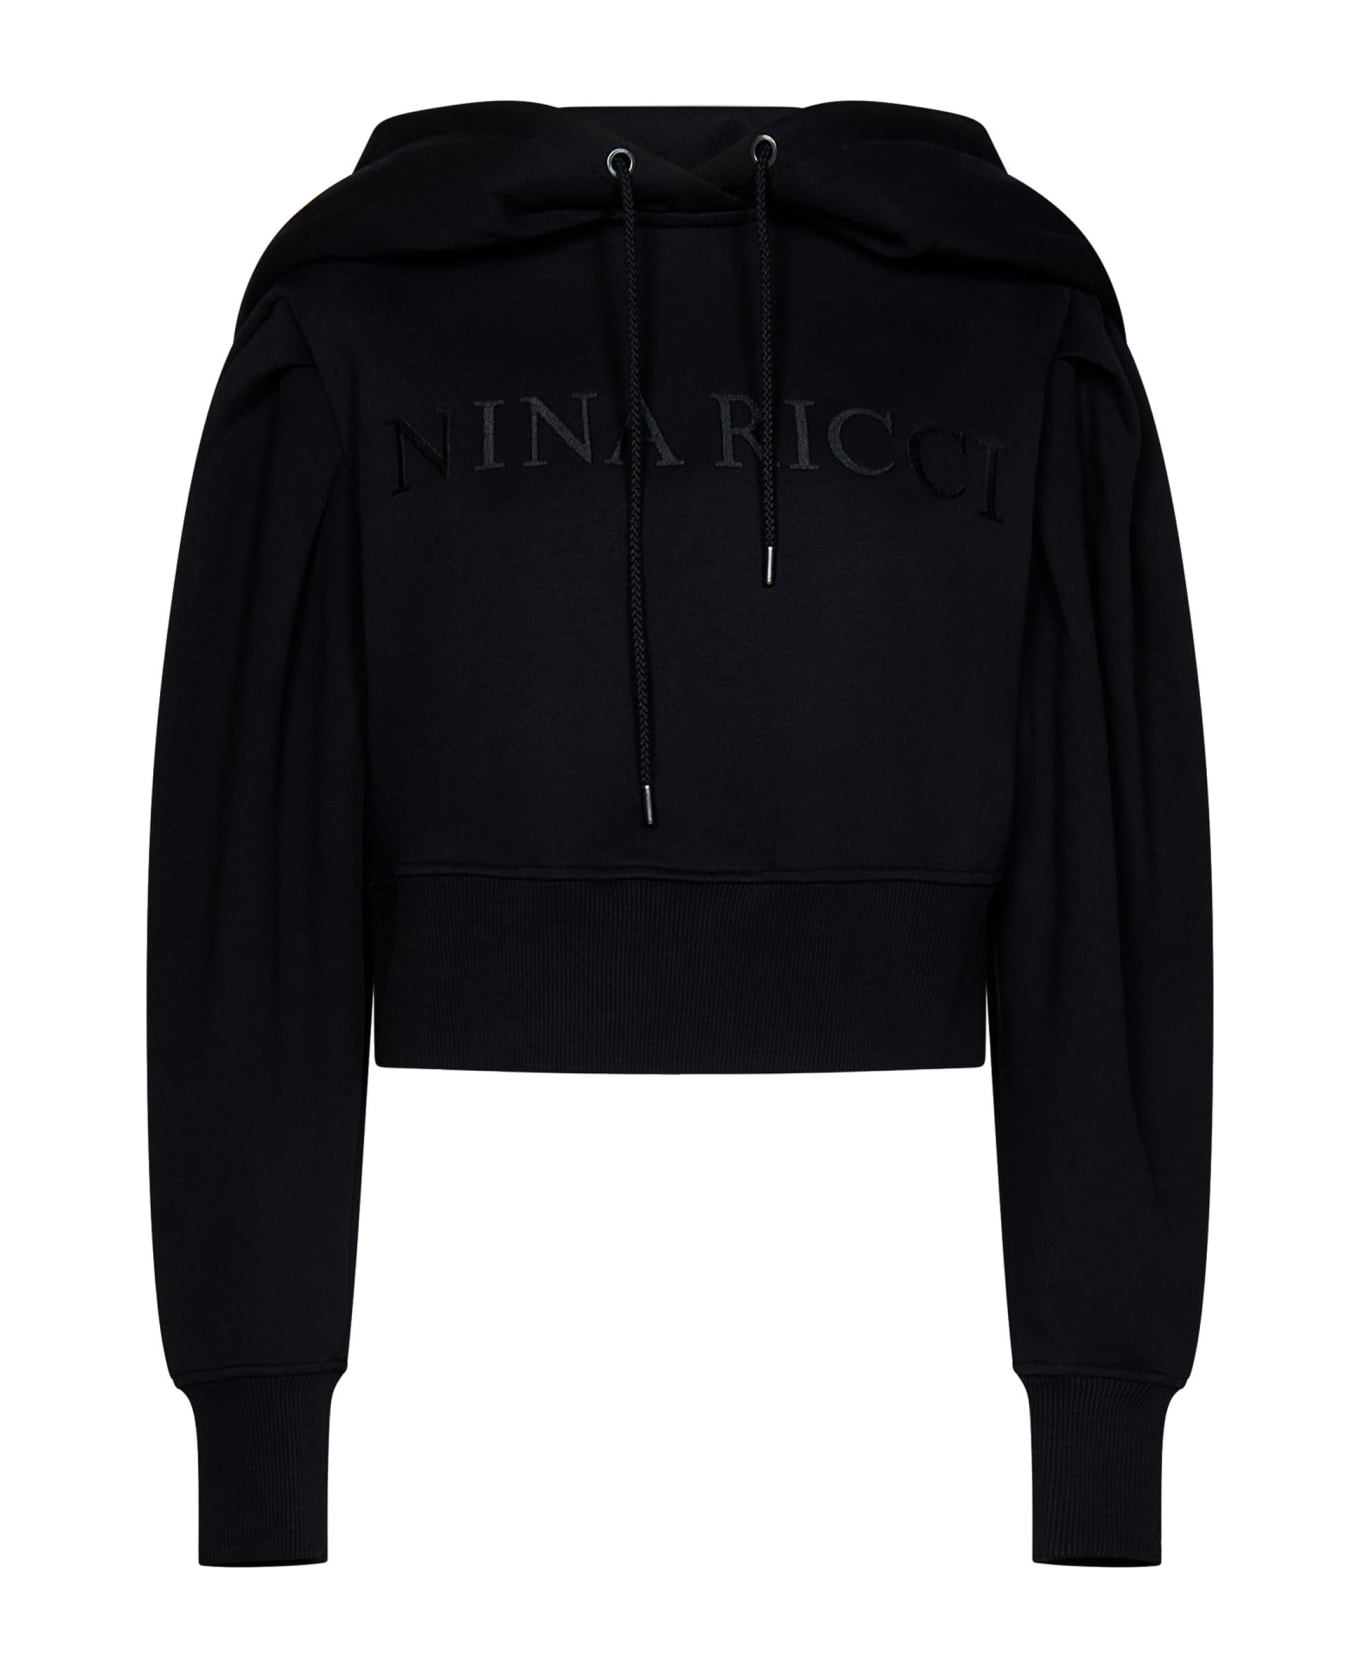 Nina Ricci Sweater - Black